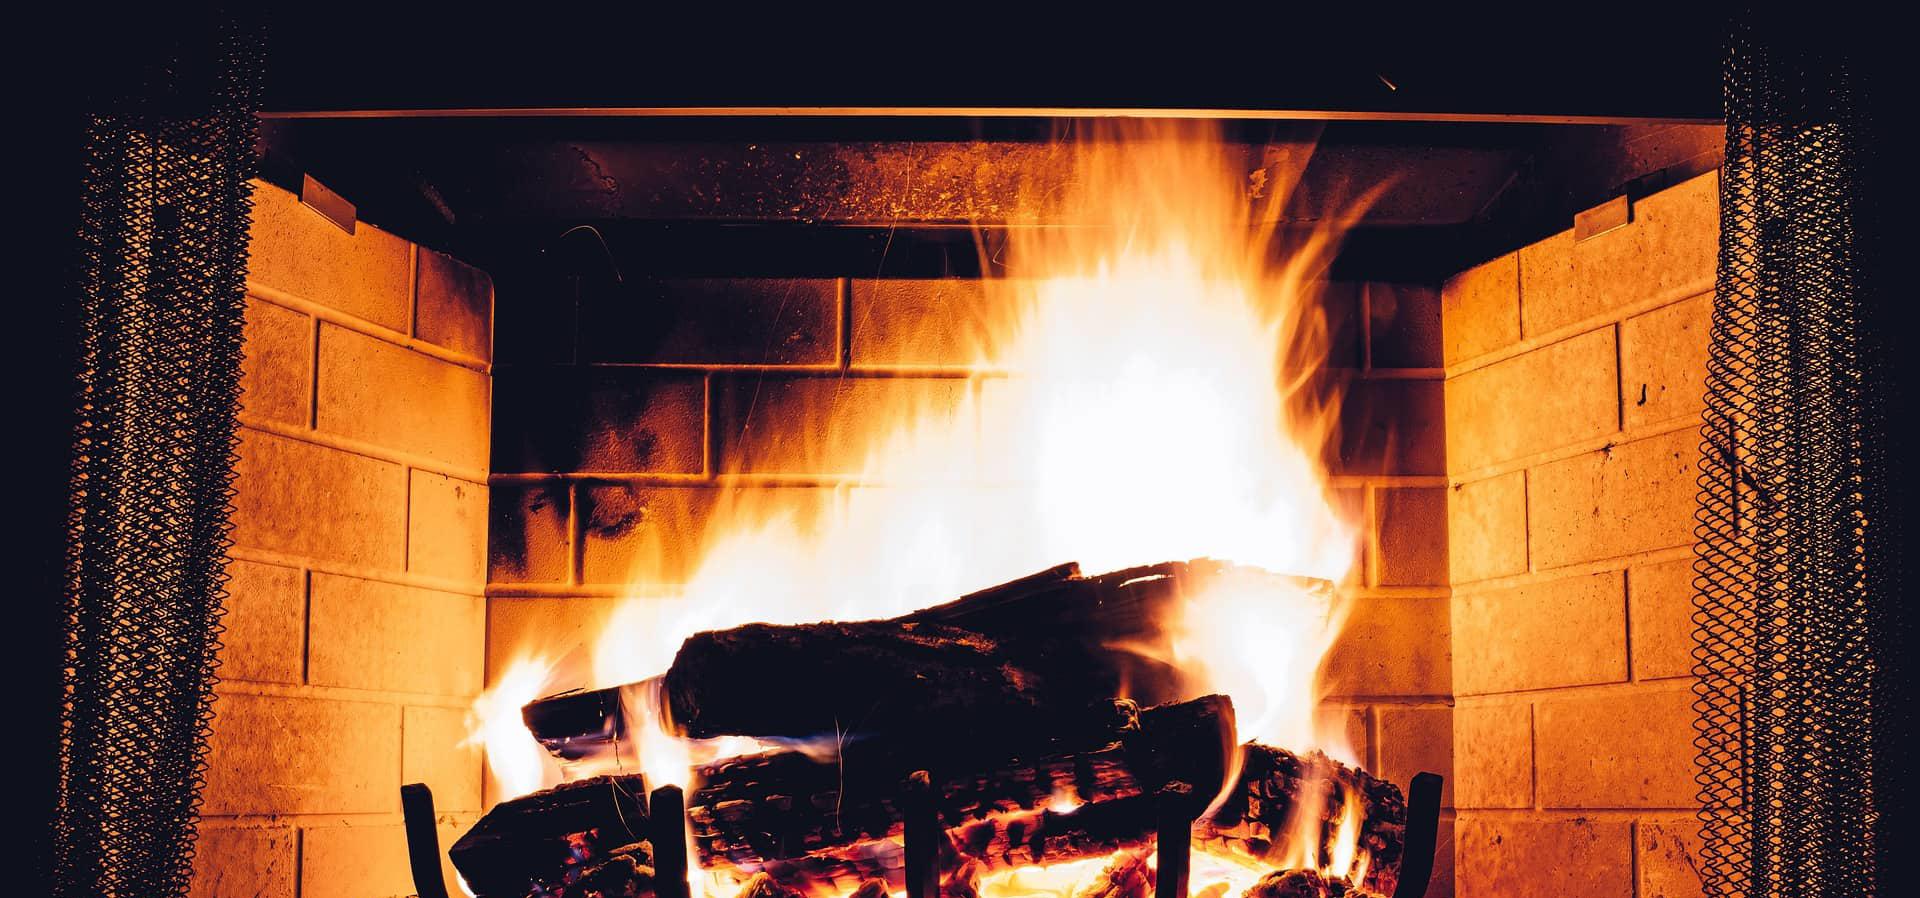 Blazing log fire in a fireplace